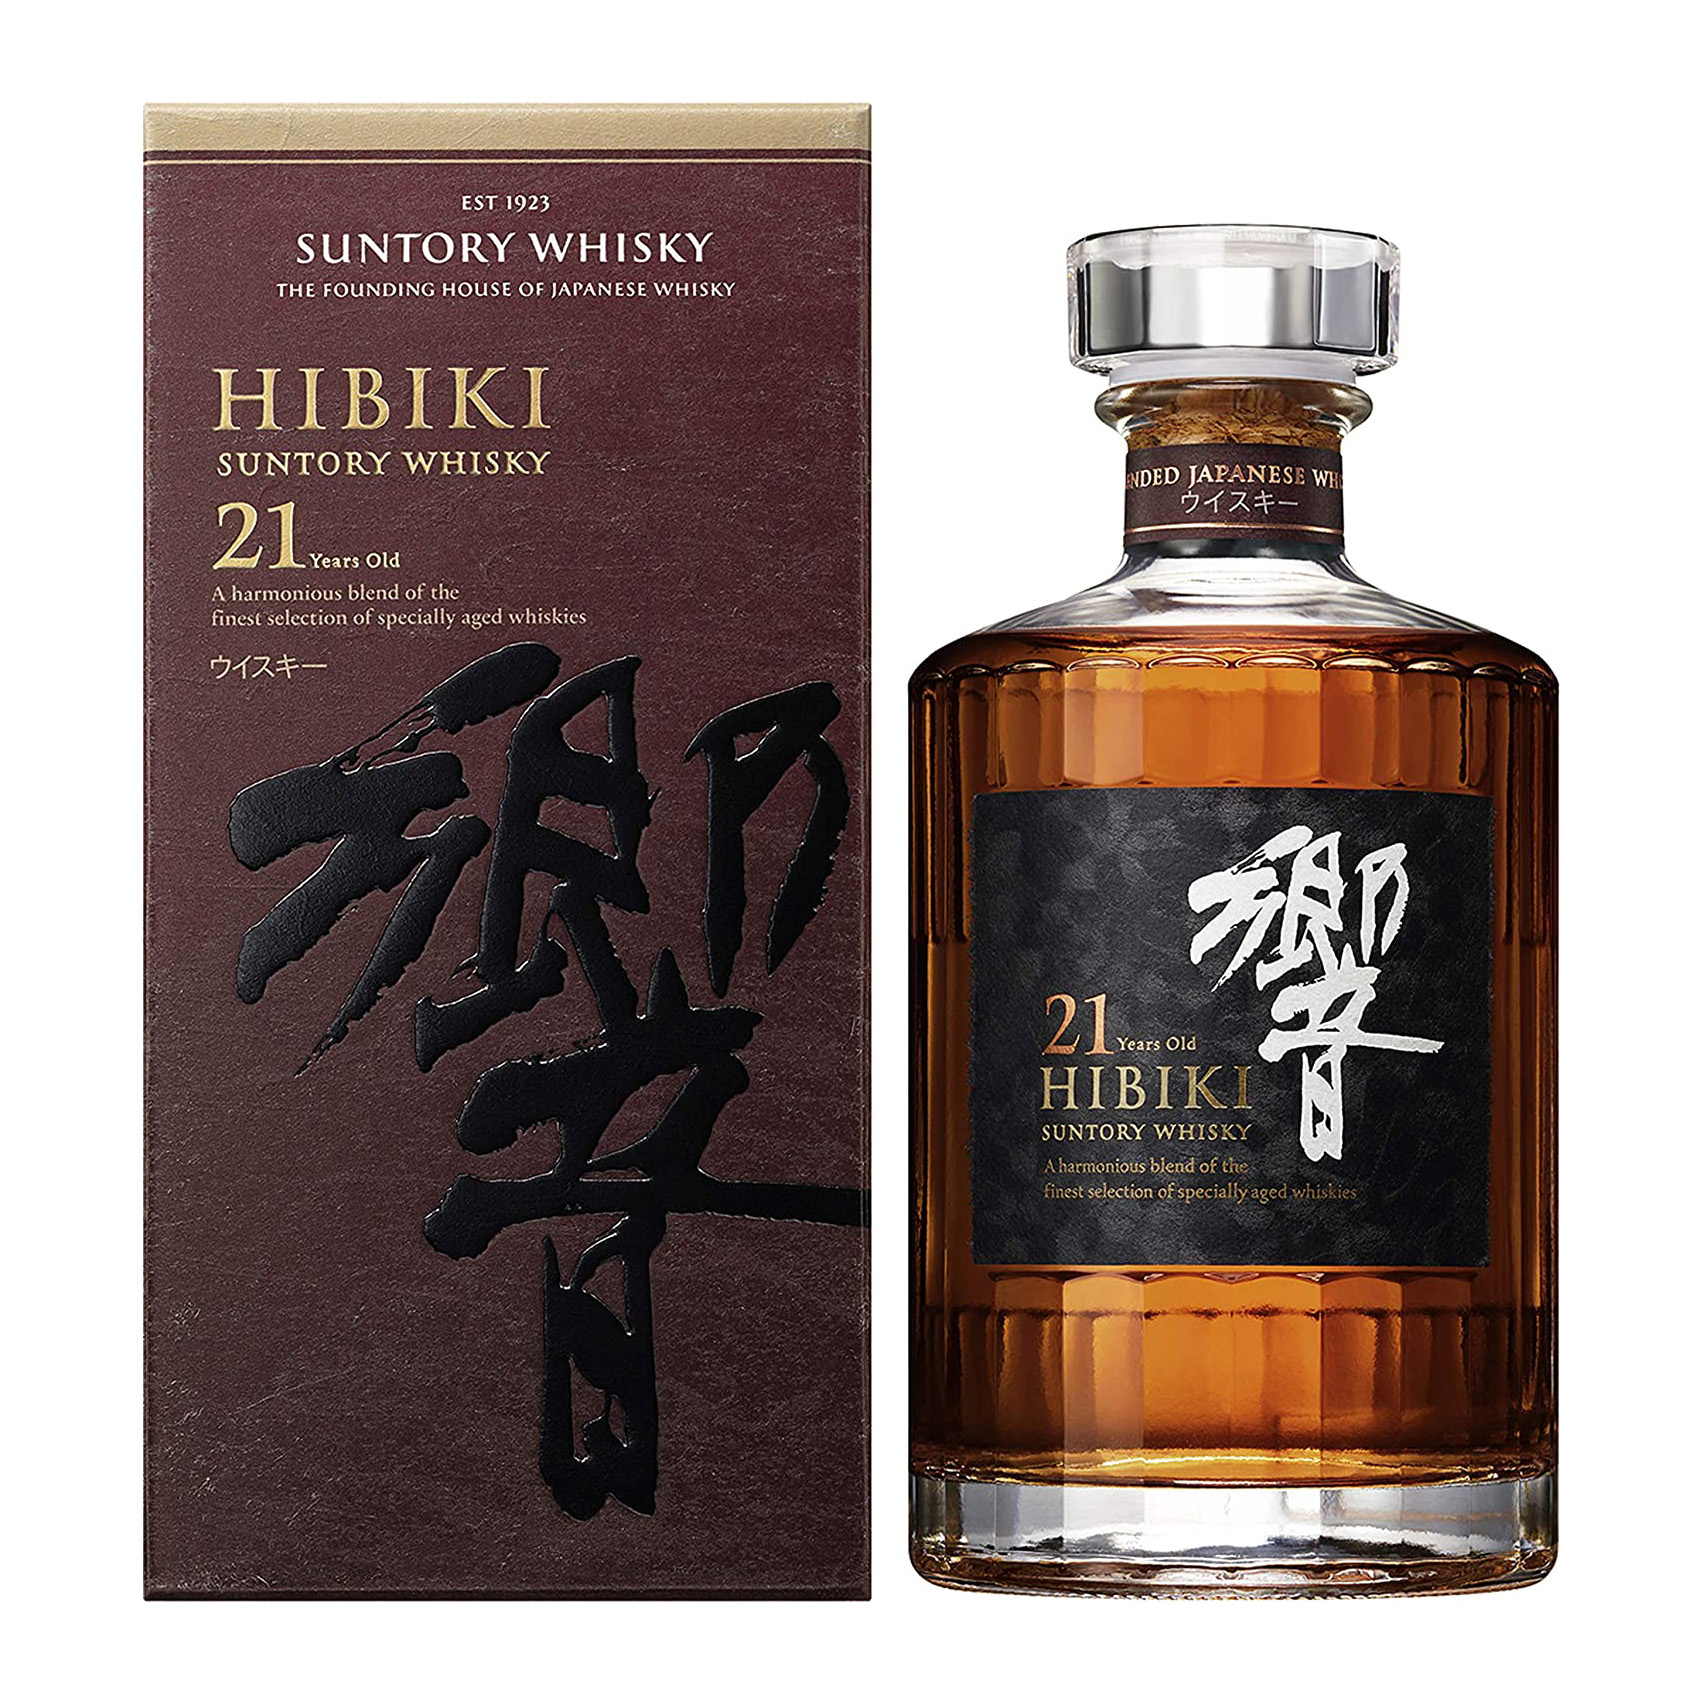 Hibiki 21 Year Old Suntory Whisky, 70 cl